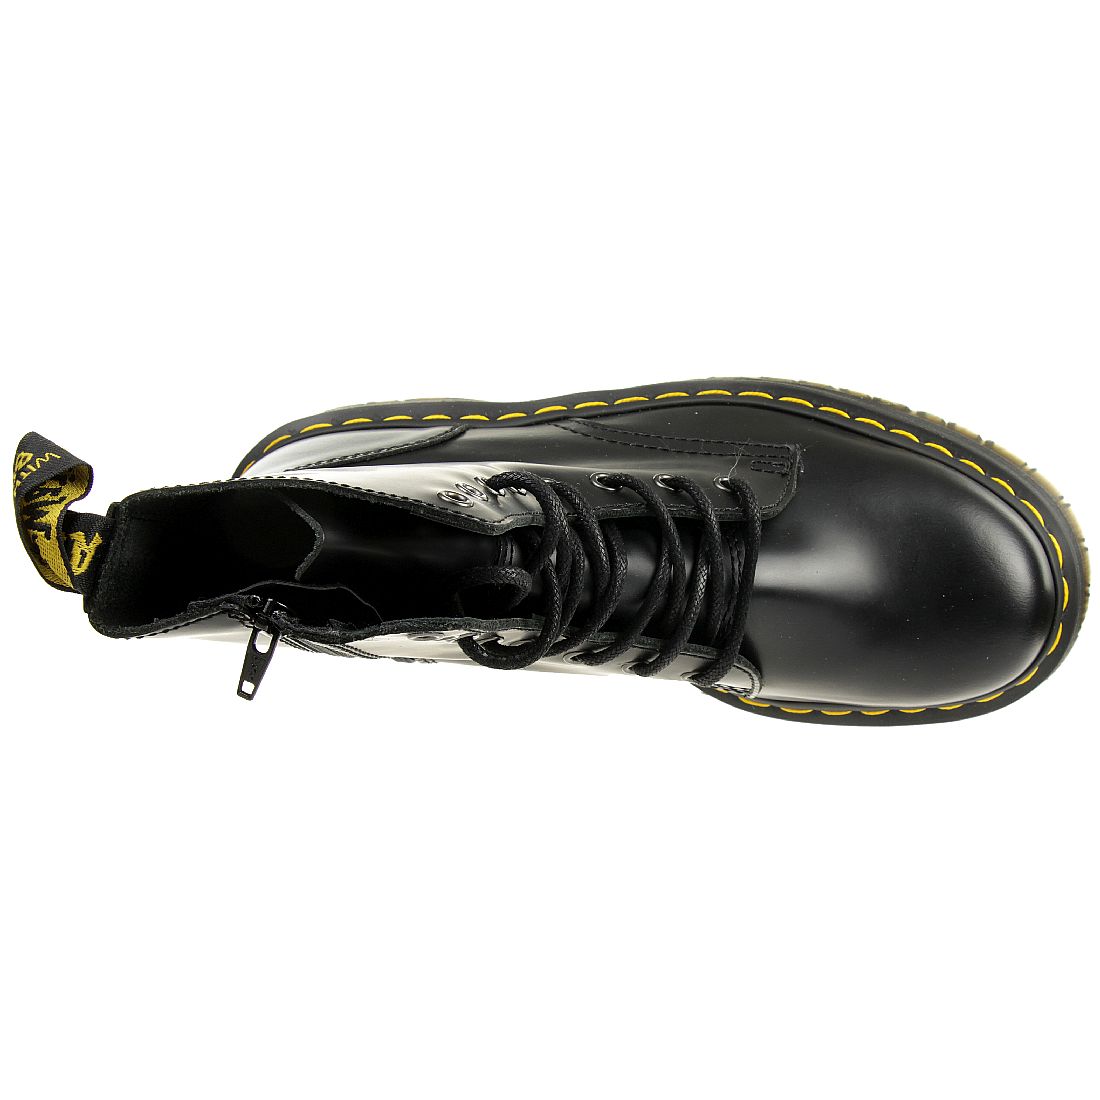 Dr. Martens JADON Polished Smooth Black Unisex Stiefel Boots Plateau schwarz 15265001